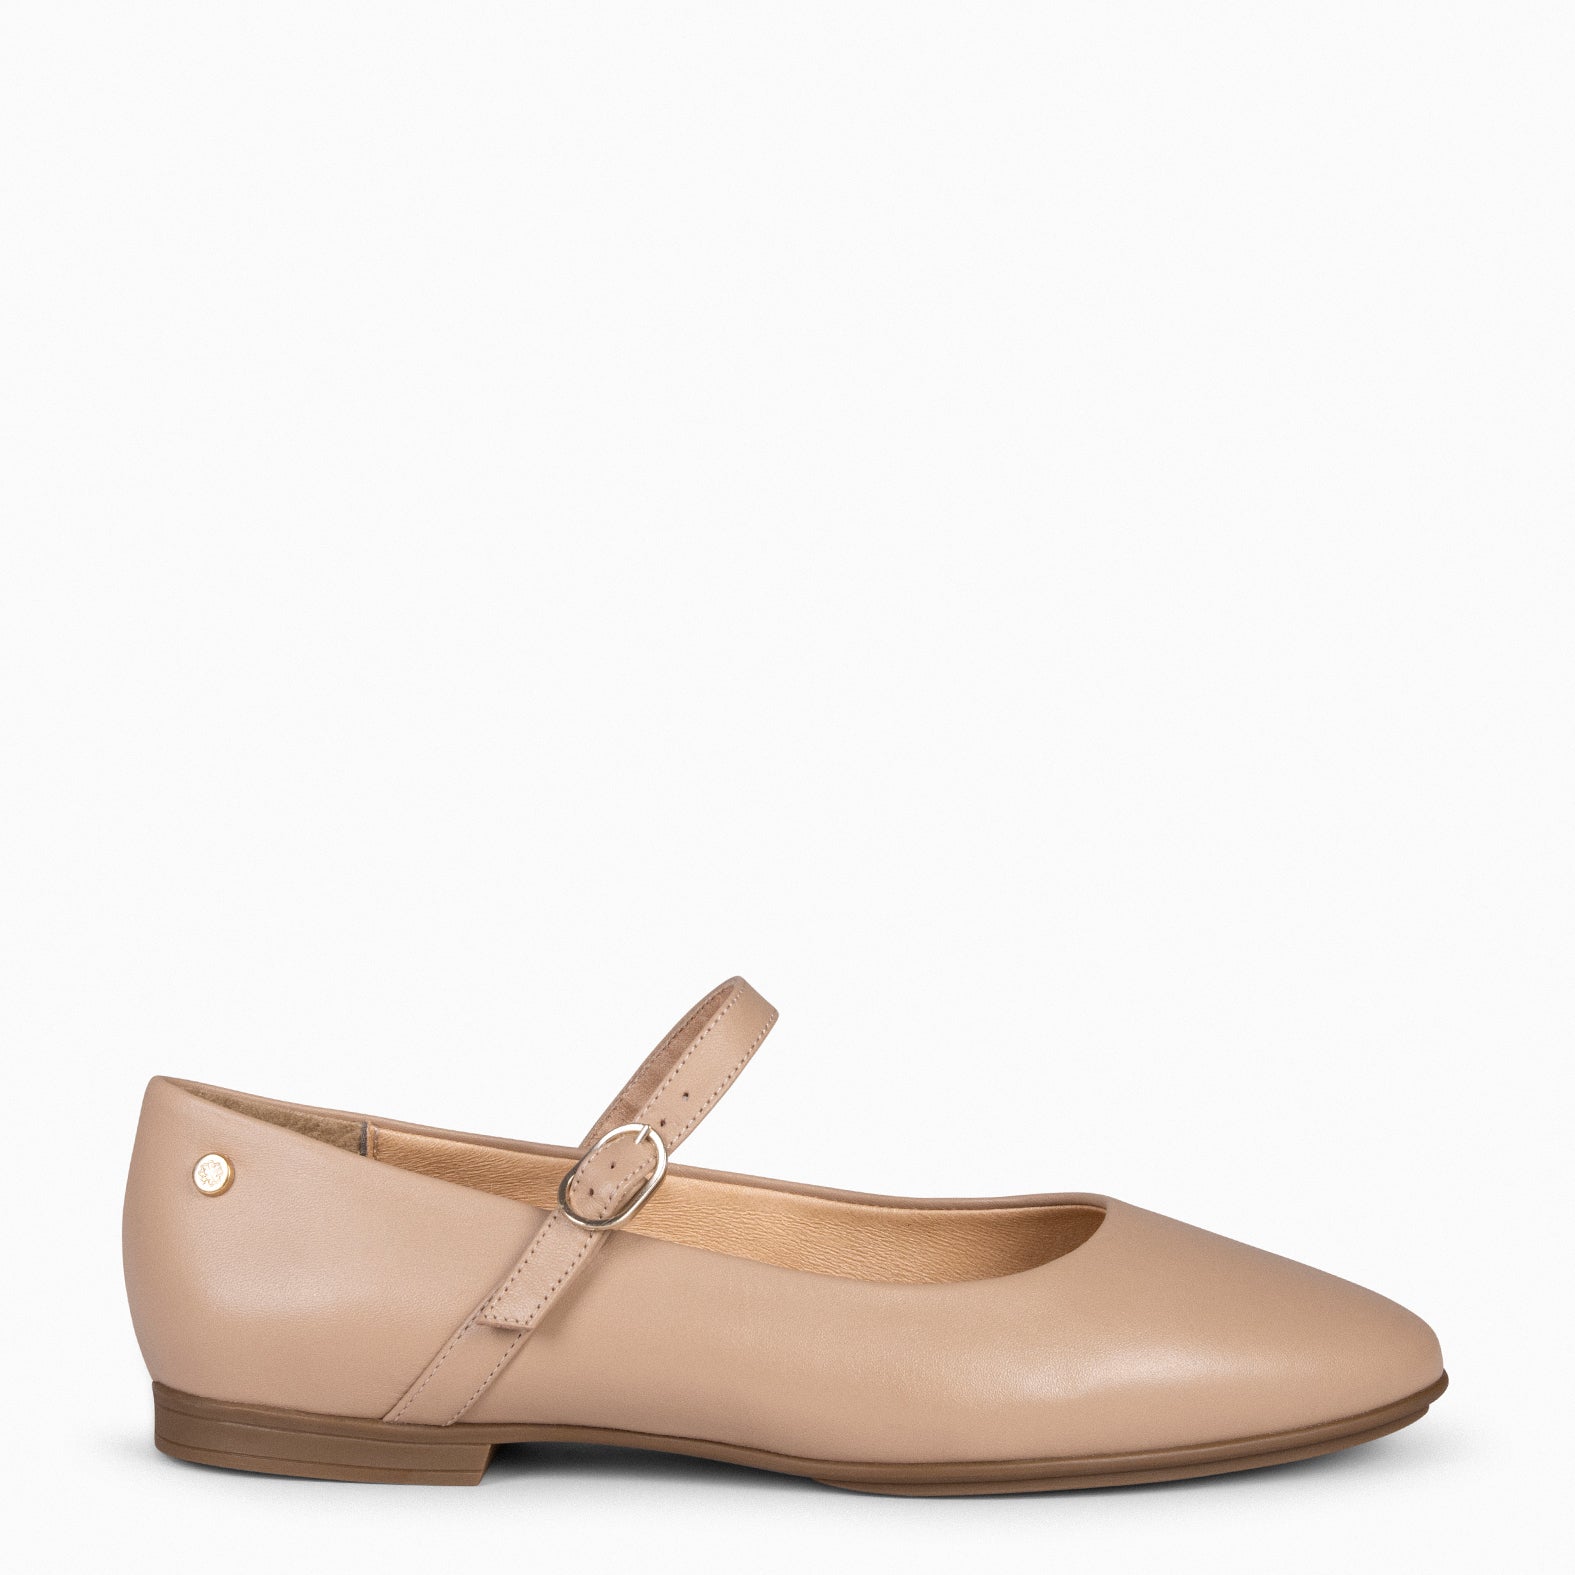 ROSALIE – NUDE rounded toe Mary-Janes